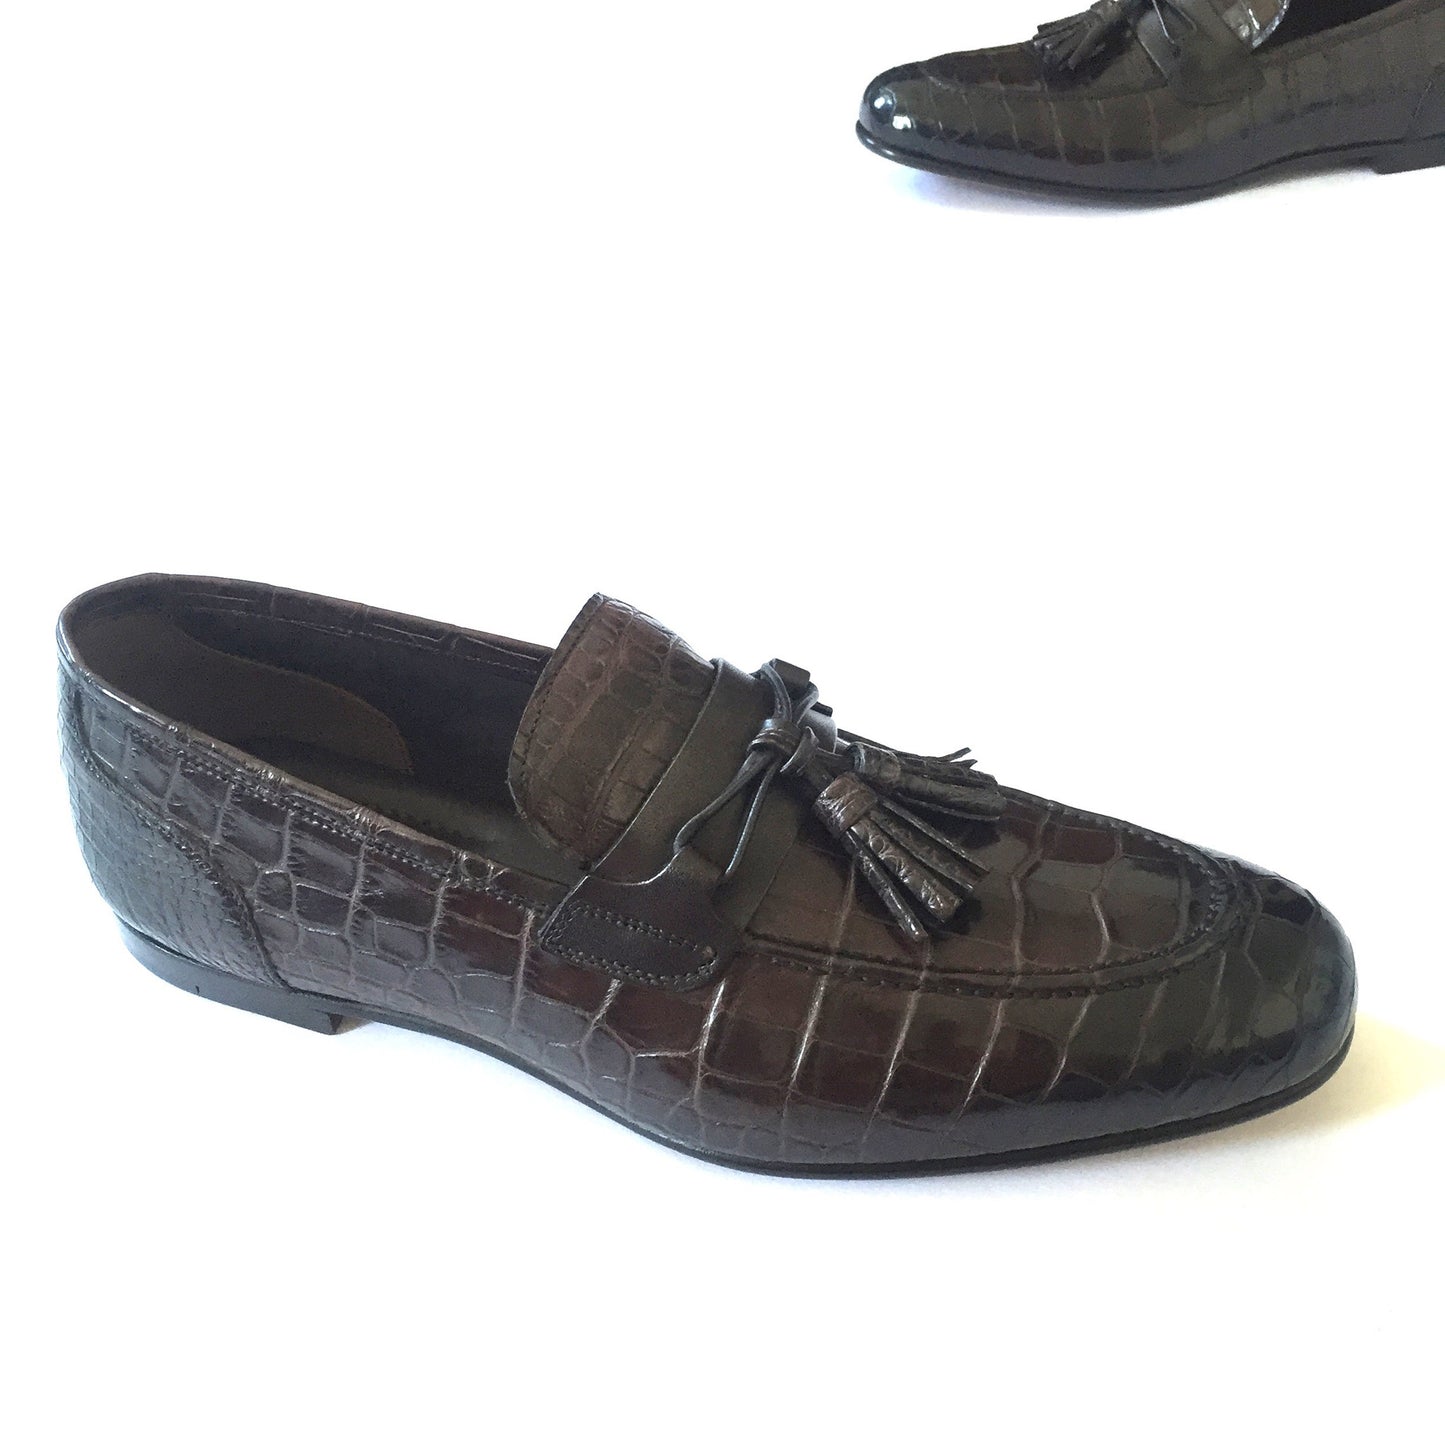 Tom Ford - Brown Genuine Crocodile Loafers